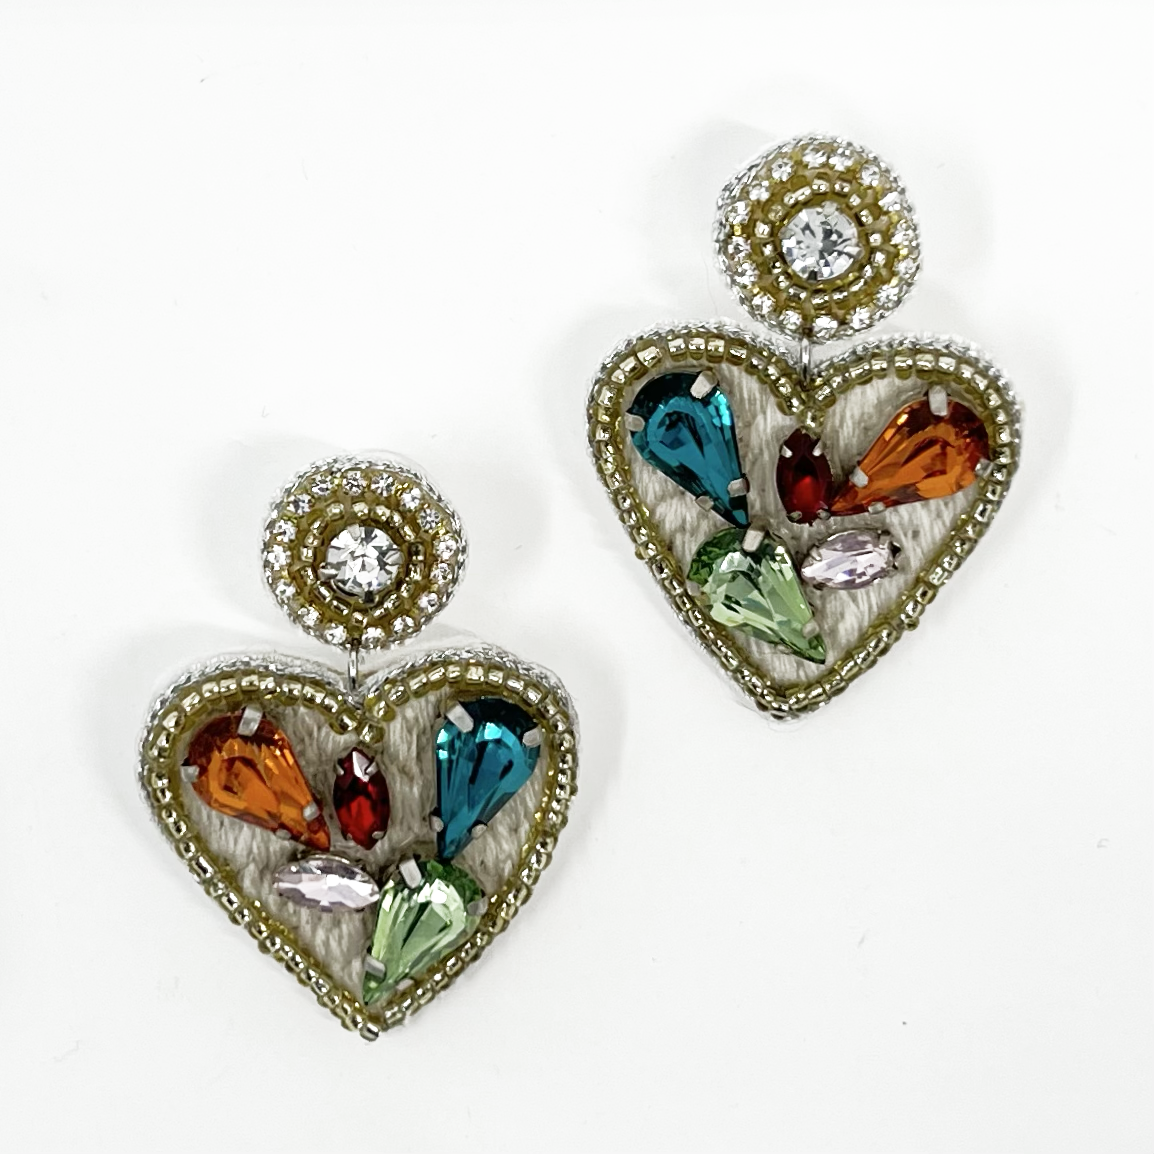 Love Affair Earrings